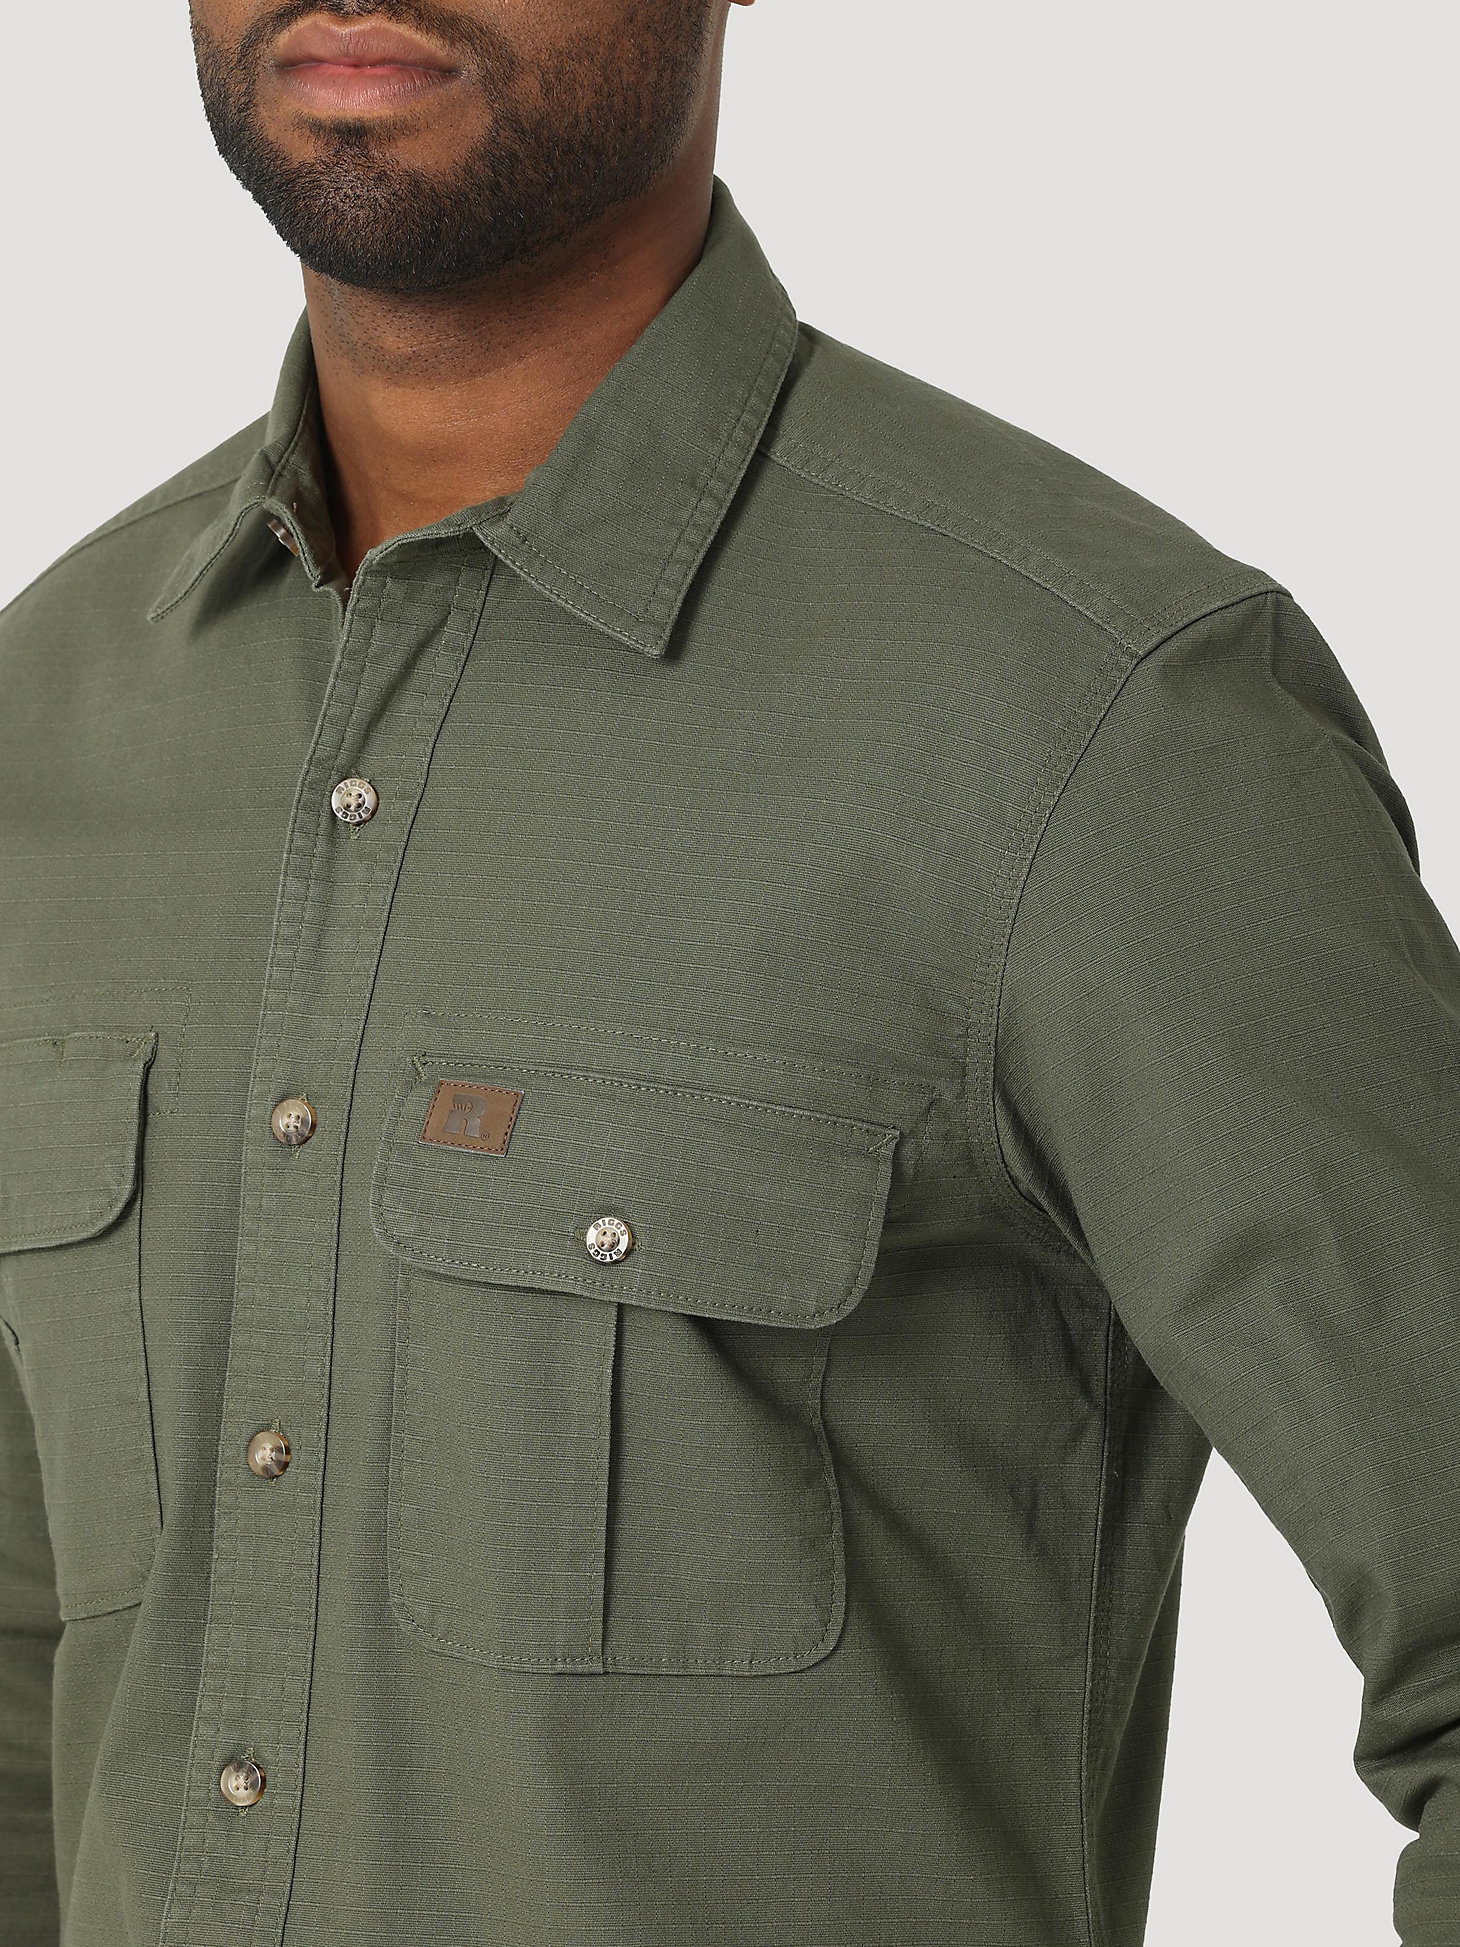 Mens RIGGS Workwear Long Sleeve Ripstop Work Shirt in Grape Leaf alternative view 3